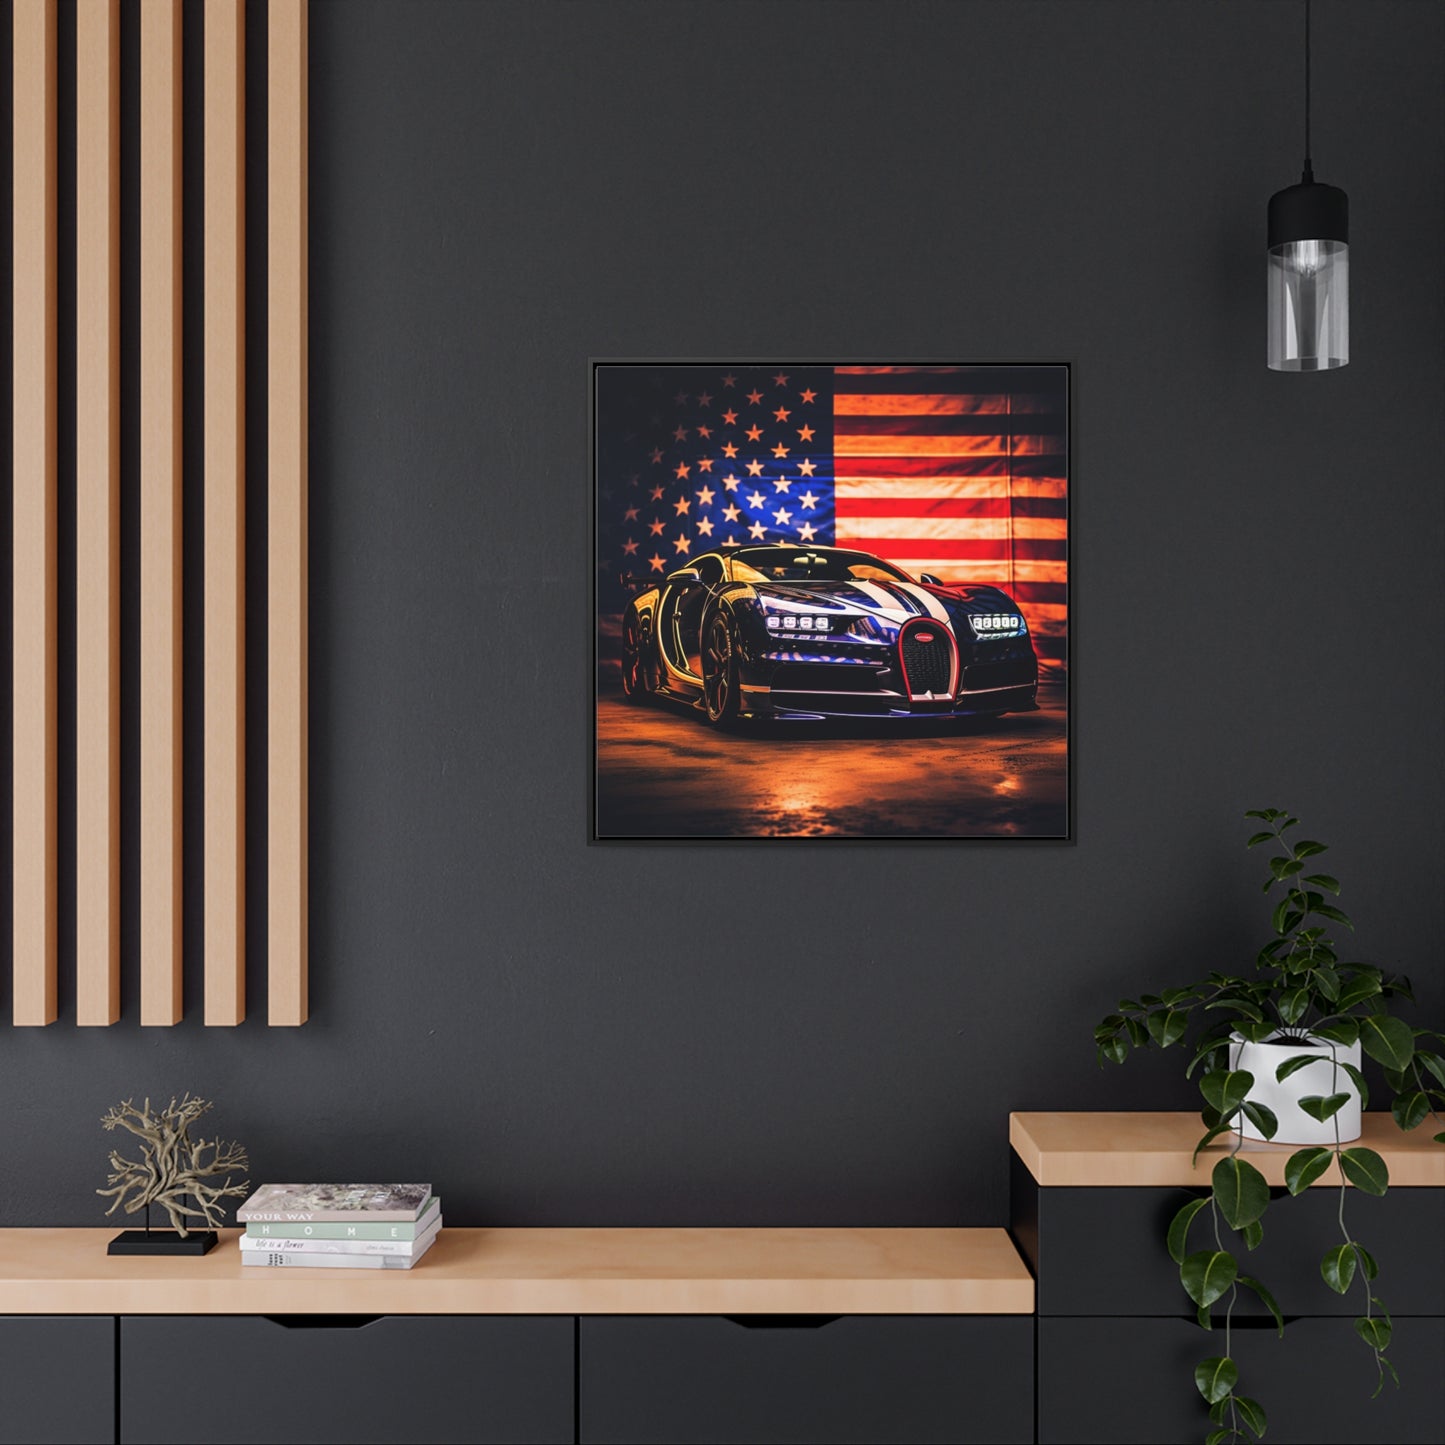 Gallery Canvas Wraps, Square Frame Macro Bugatti American Flag 4